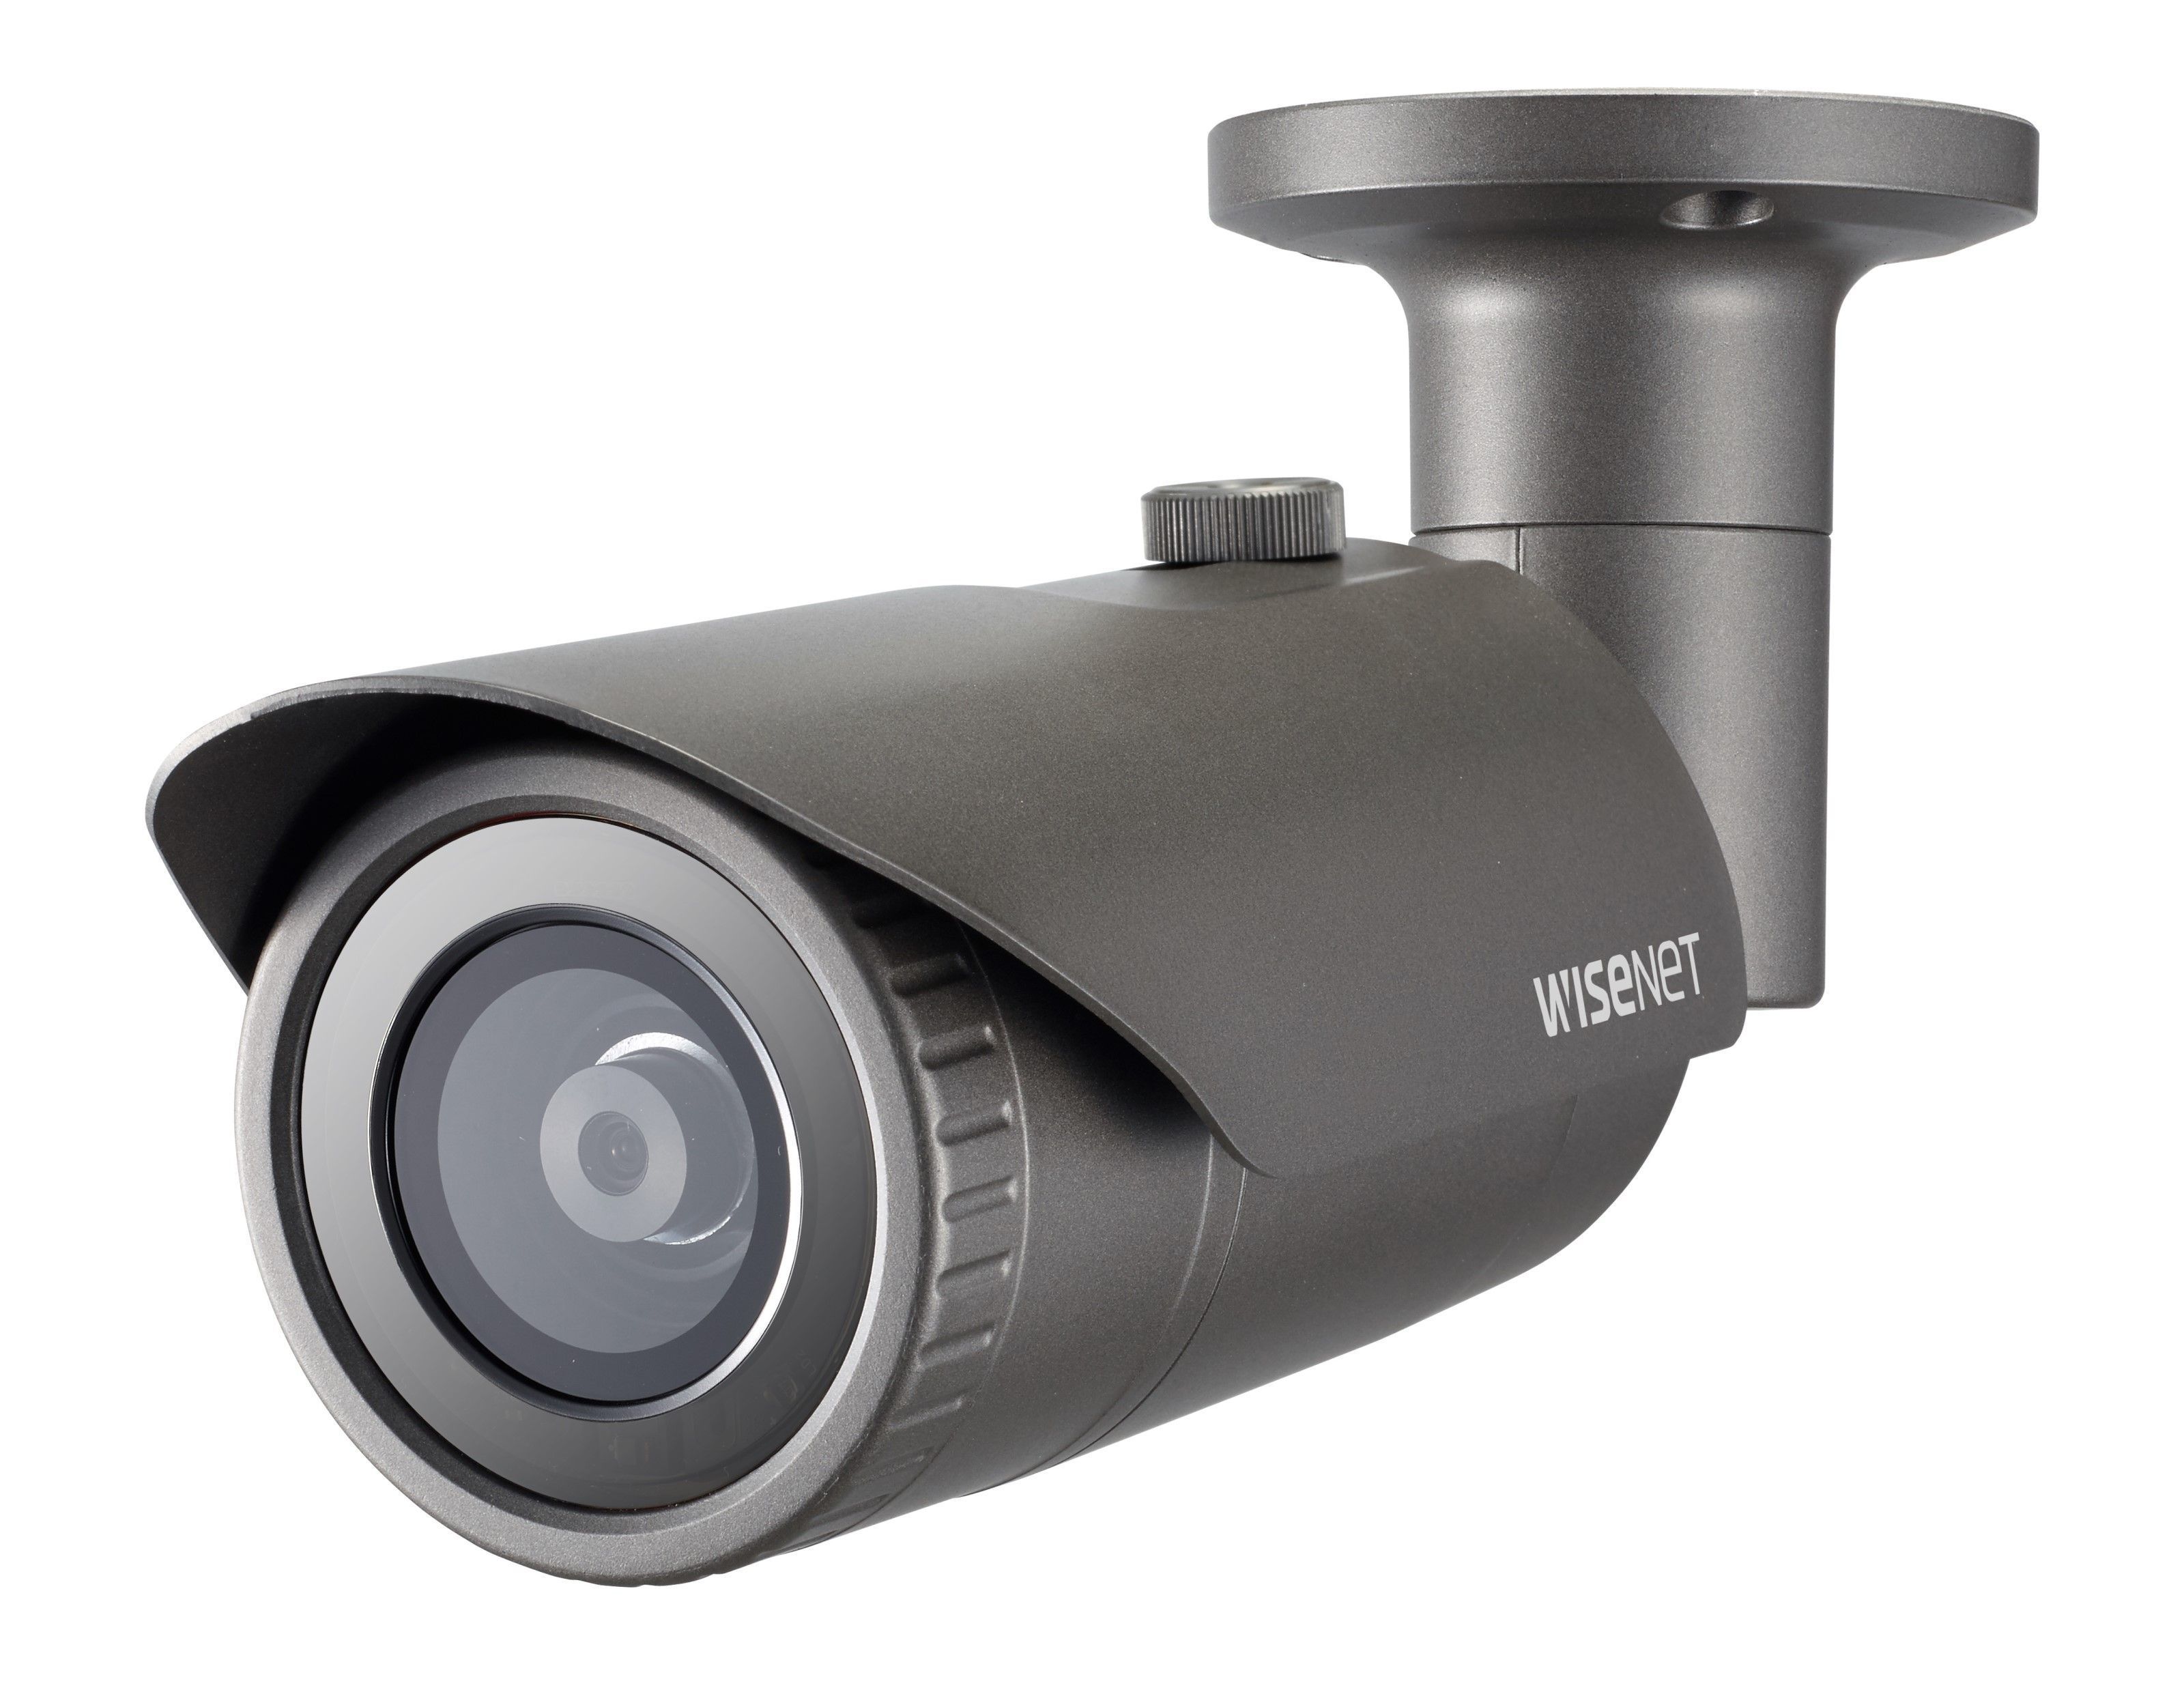 Цилиндрическая камера видеонаблюдения Wisenet QNO-8020R